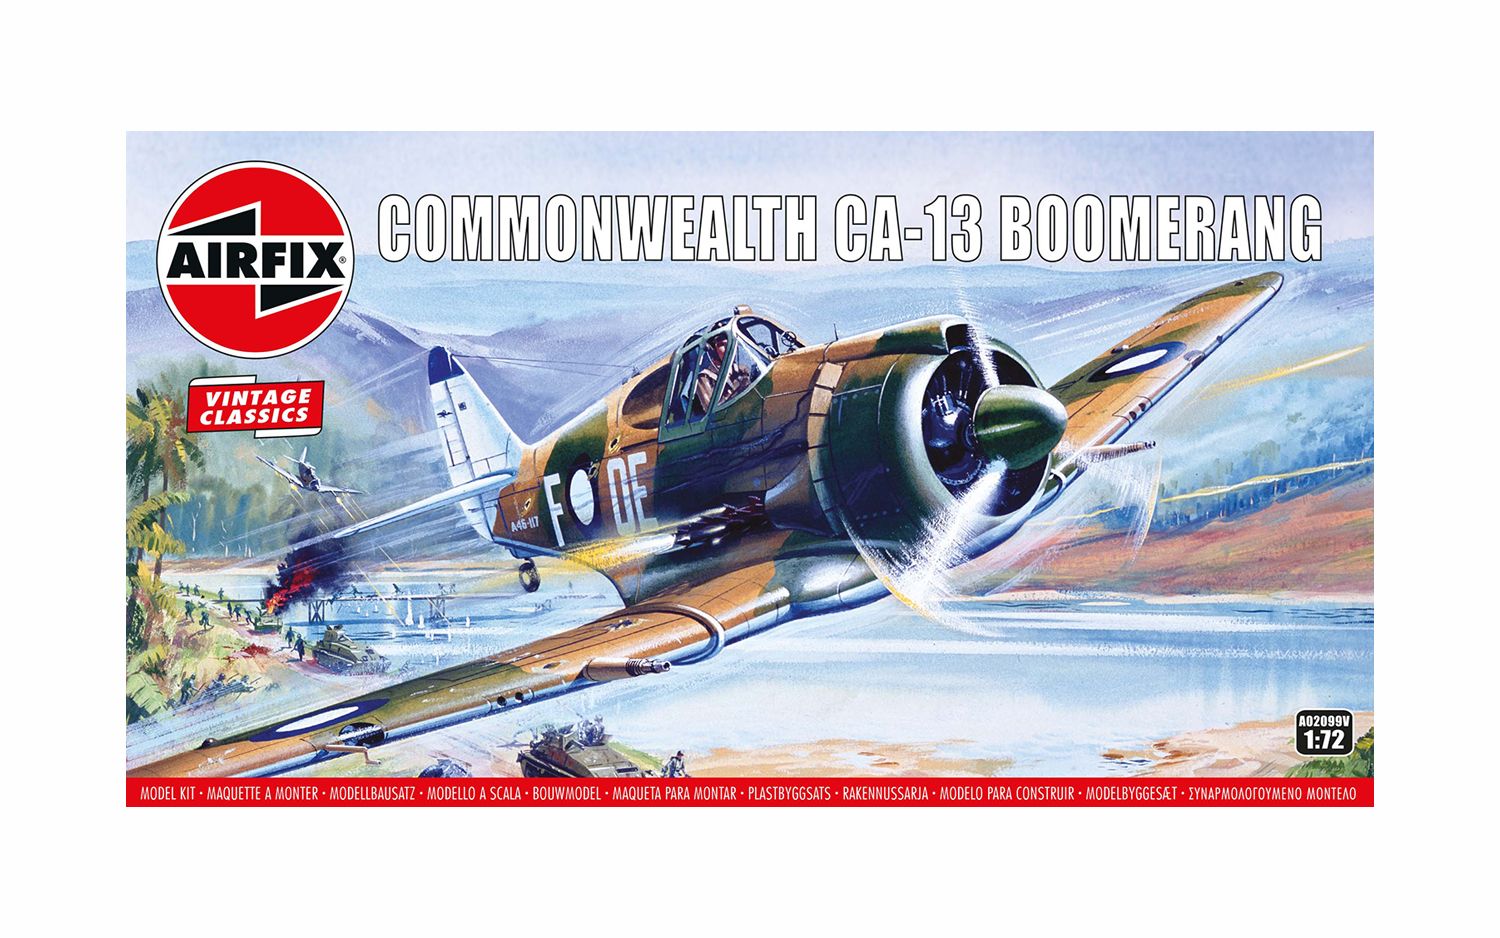 Airfix Commonwealth CA-13 Boomerang 1:72